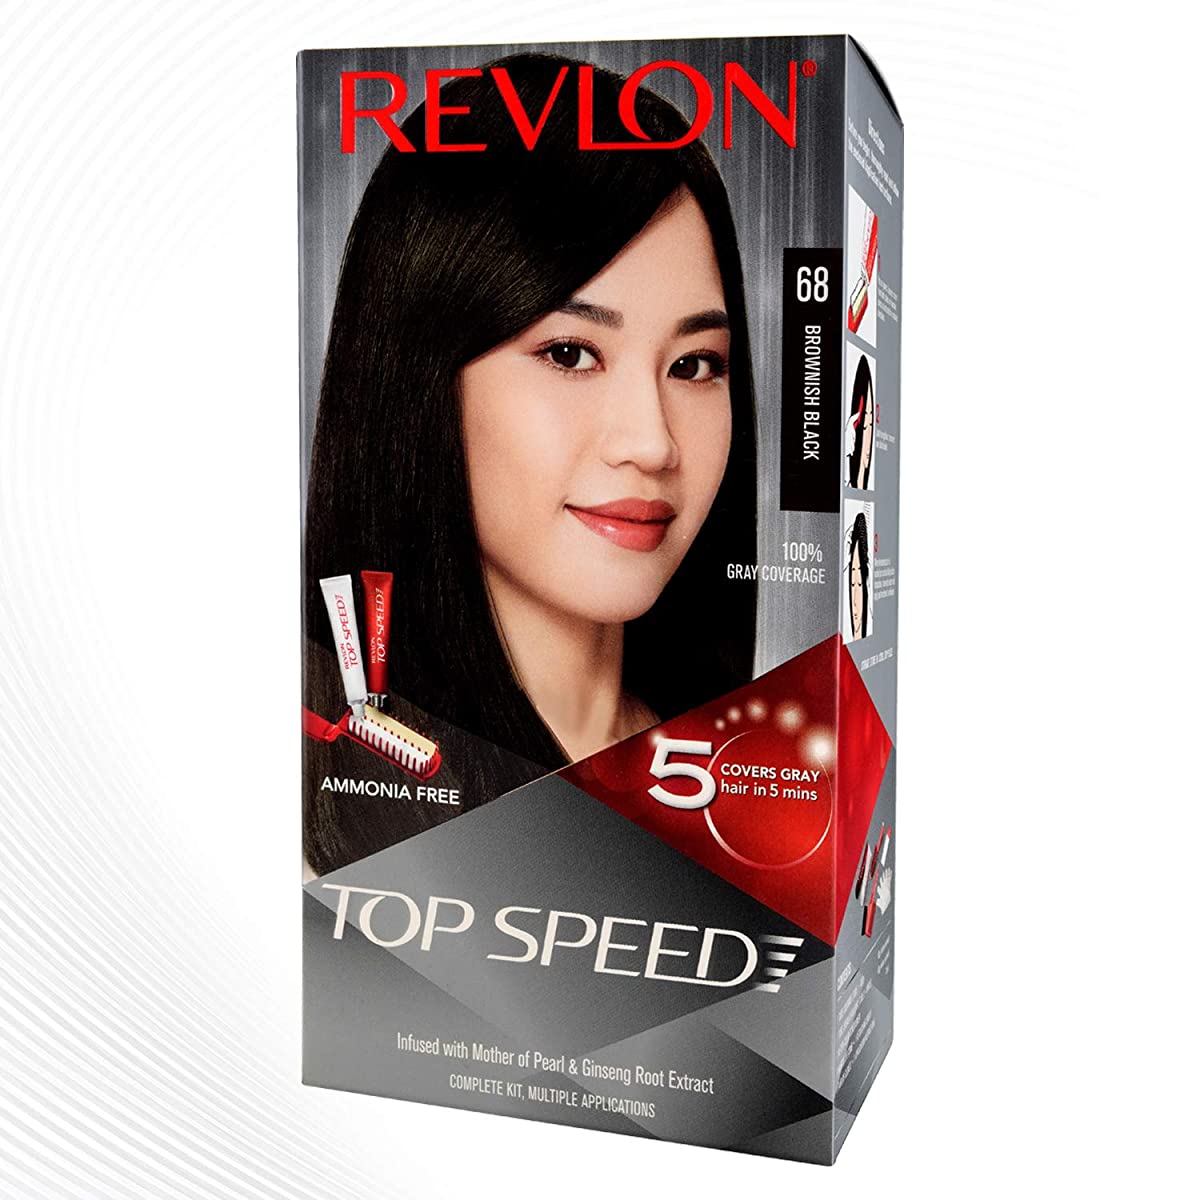 Revlon Top Speed Hair Color 68 Brownish Black (40 g + 40 g + 15 ml) Revlon